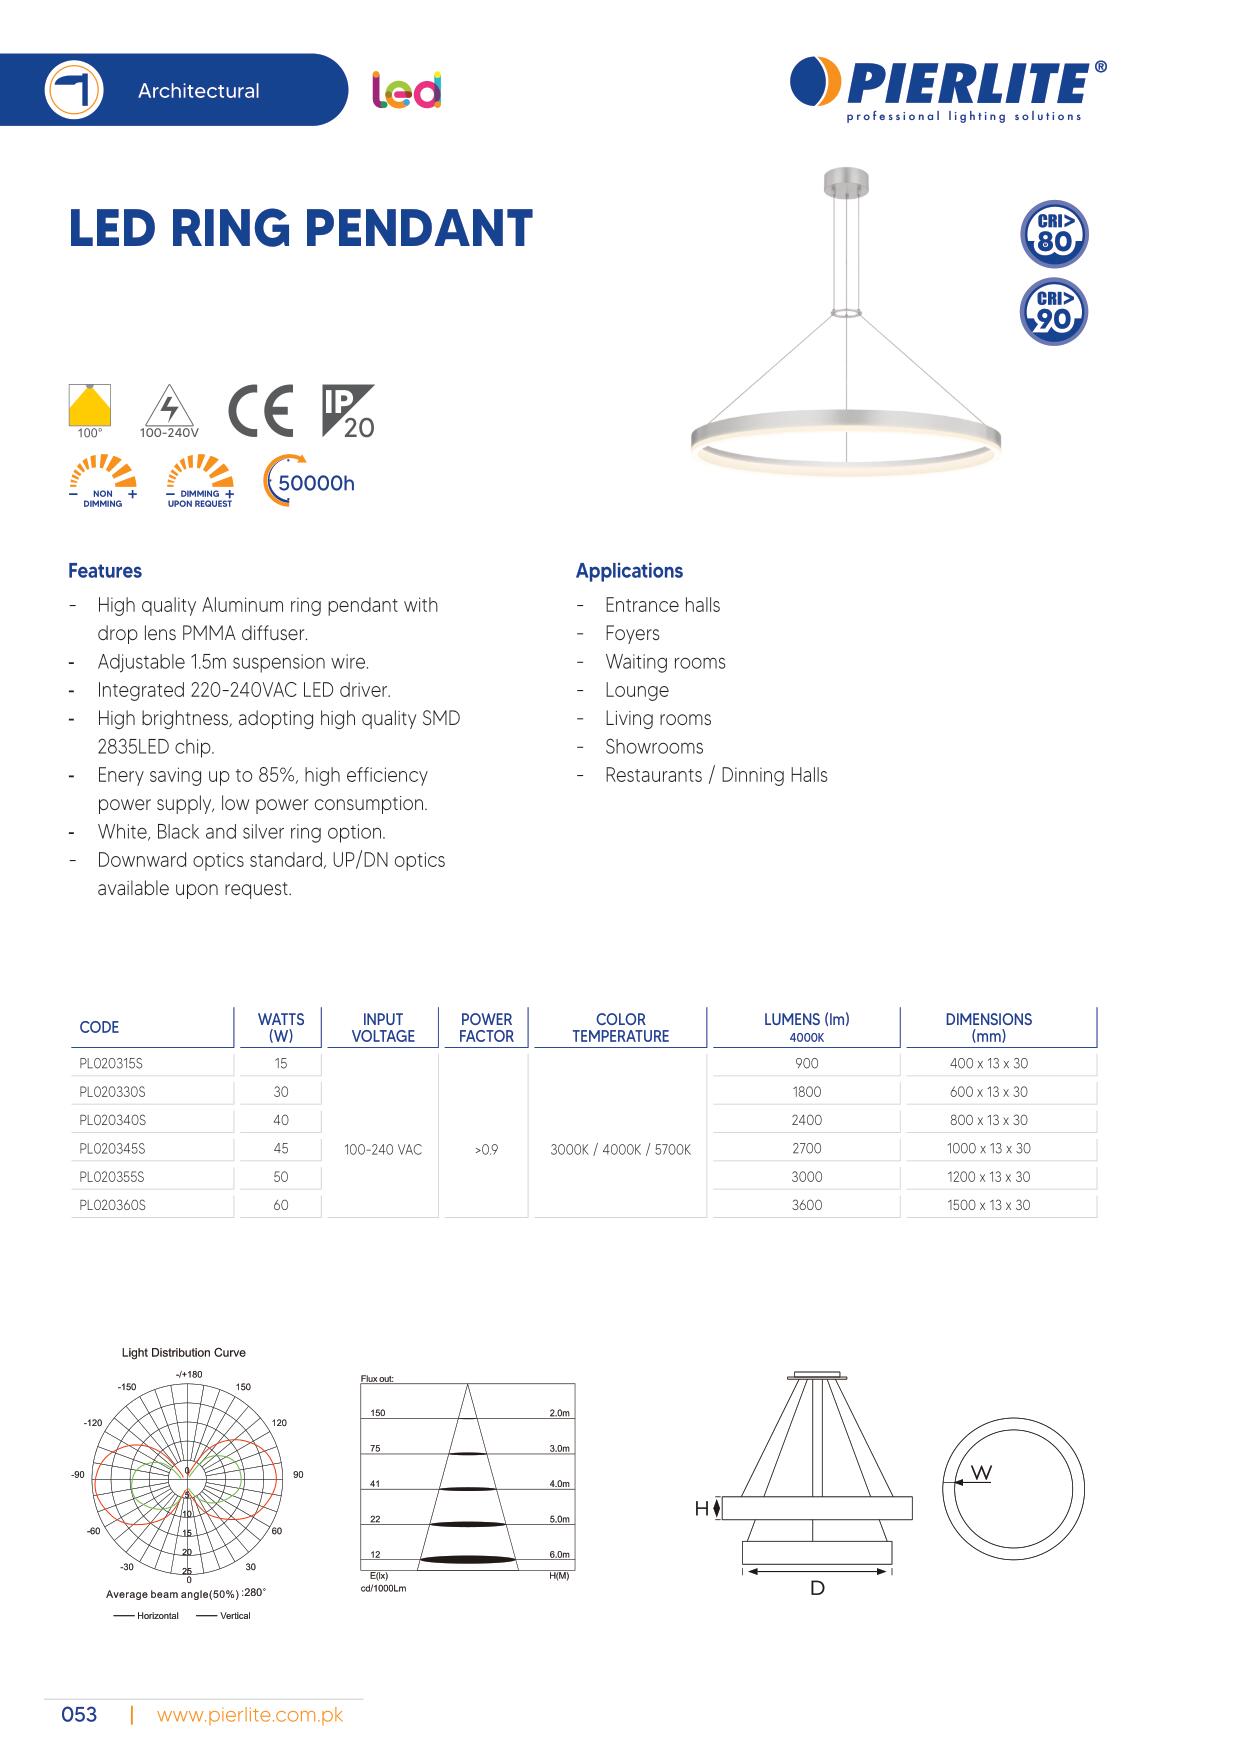 Pierlite LED Luminaire Catalog 2021-62